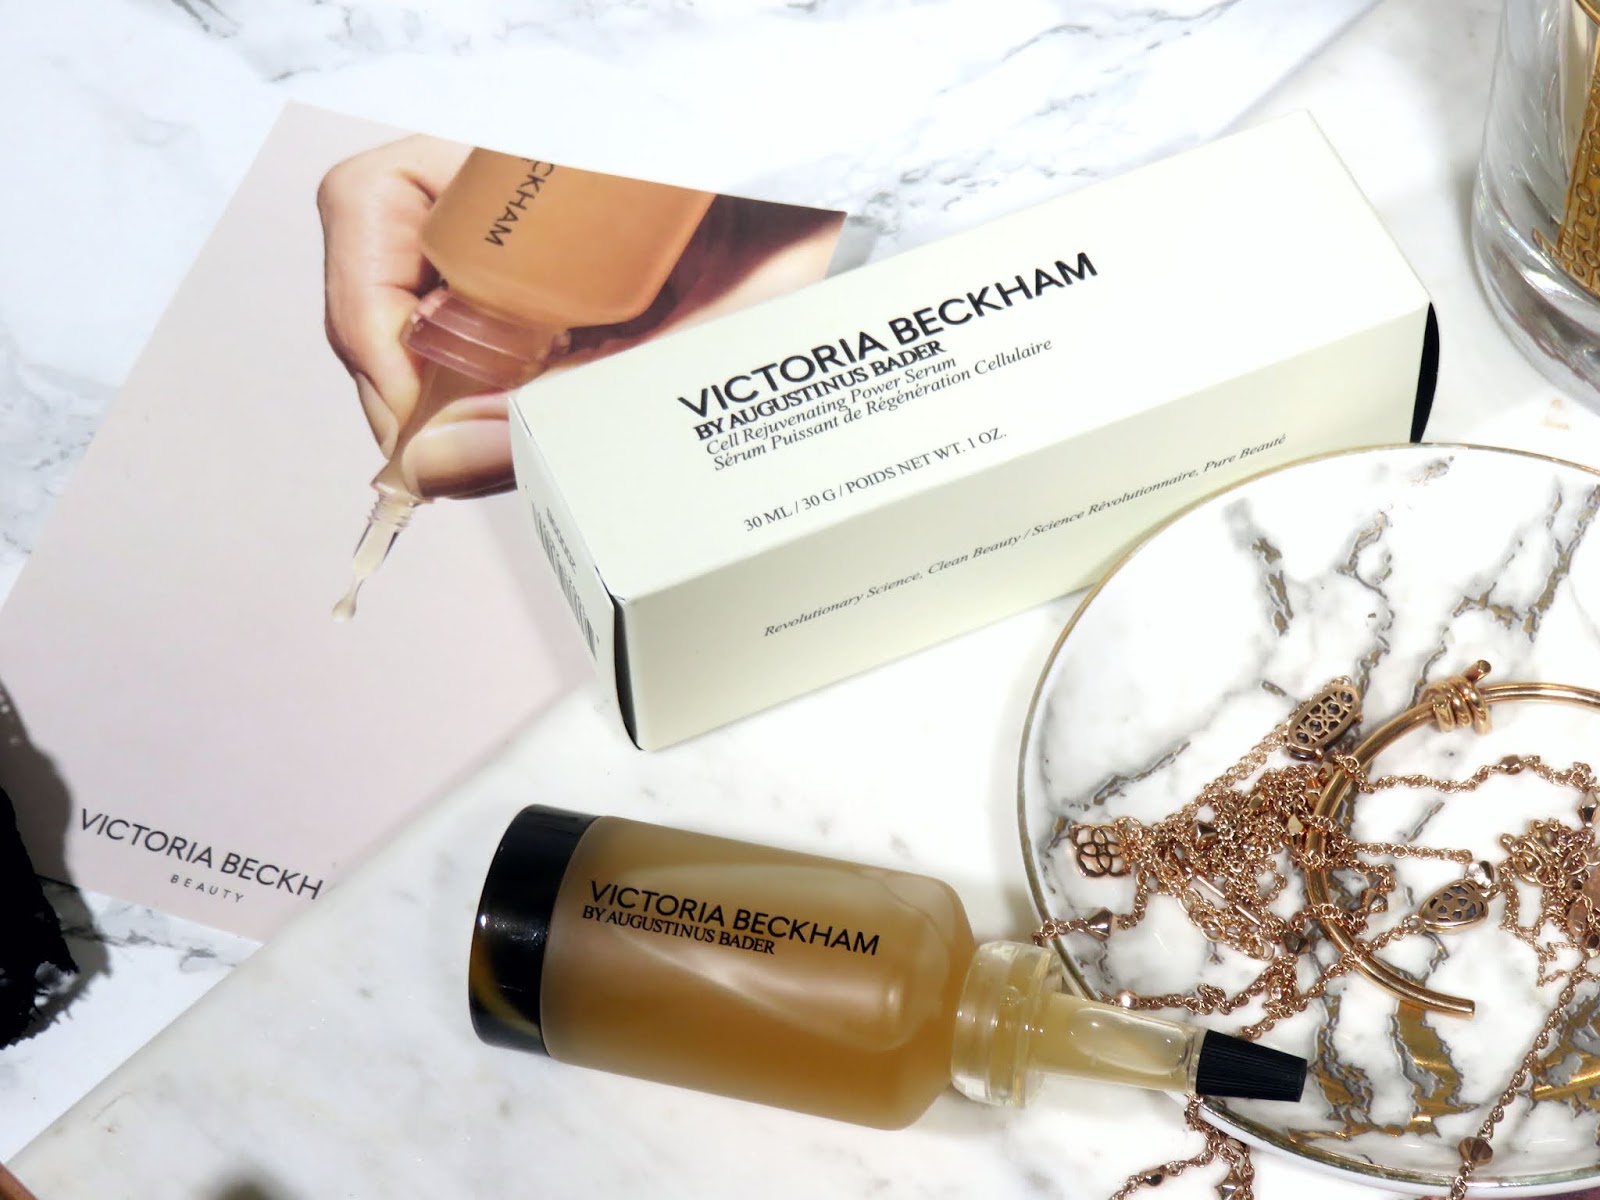 Victoria Beckham Beauty Cell Rejuvenating Power Serum Review